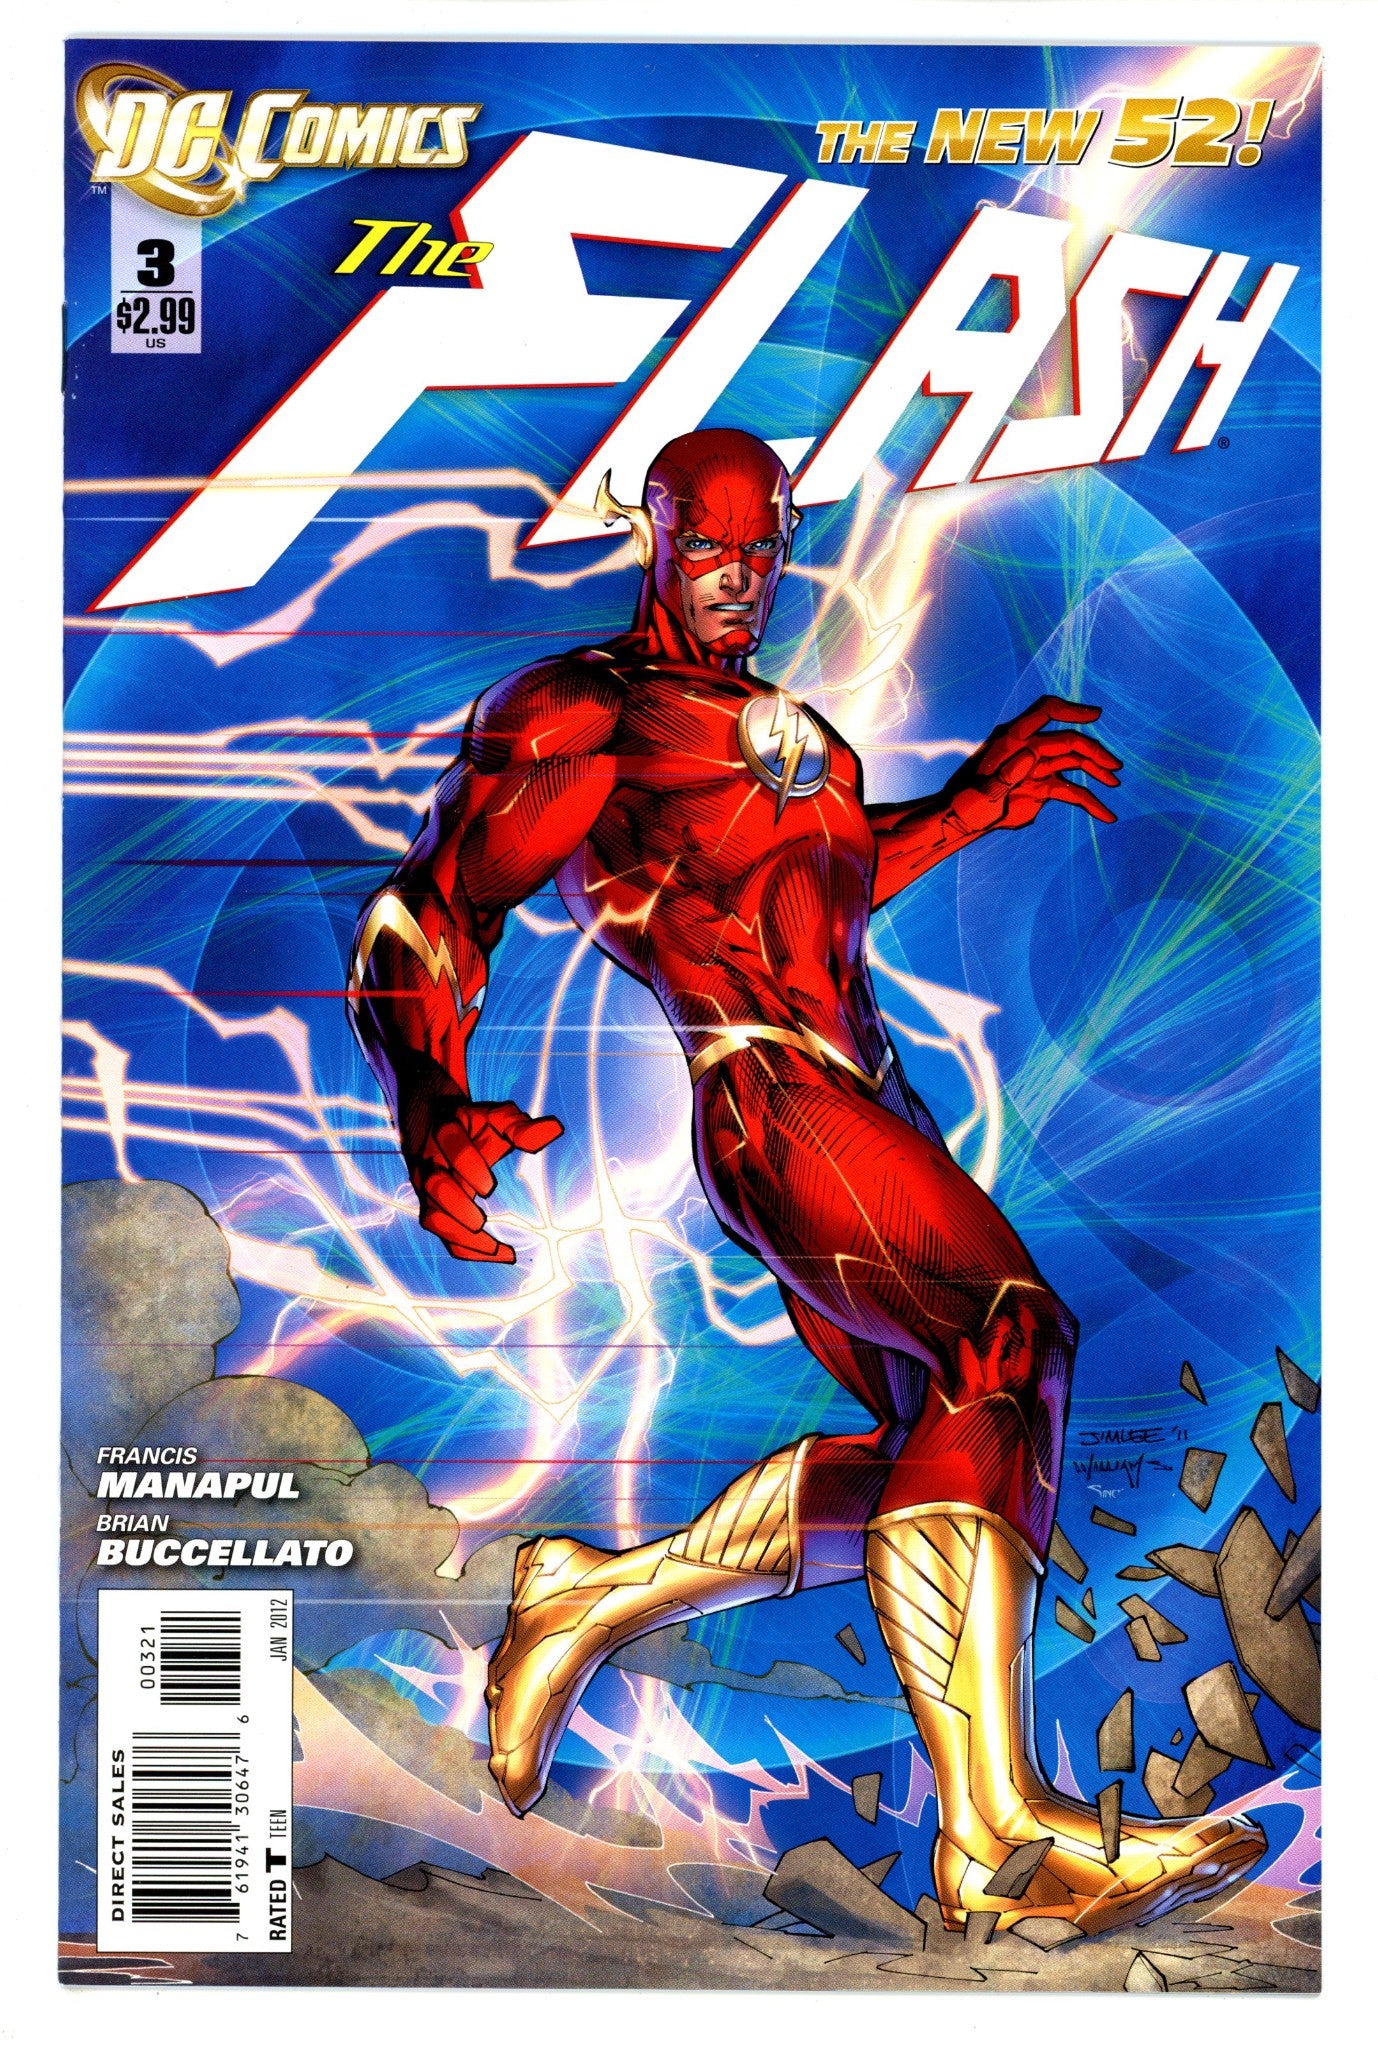 The Flash Vol 4 3 VF (8.0) (2012) Lee Variant 